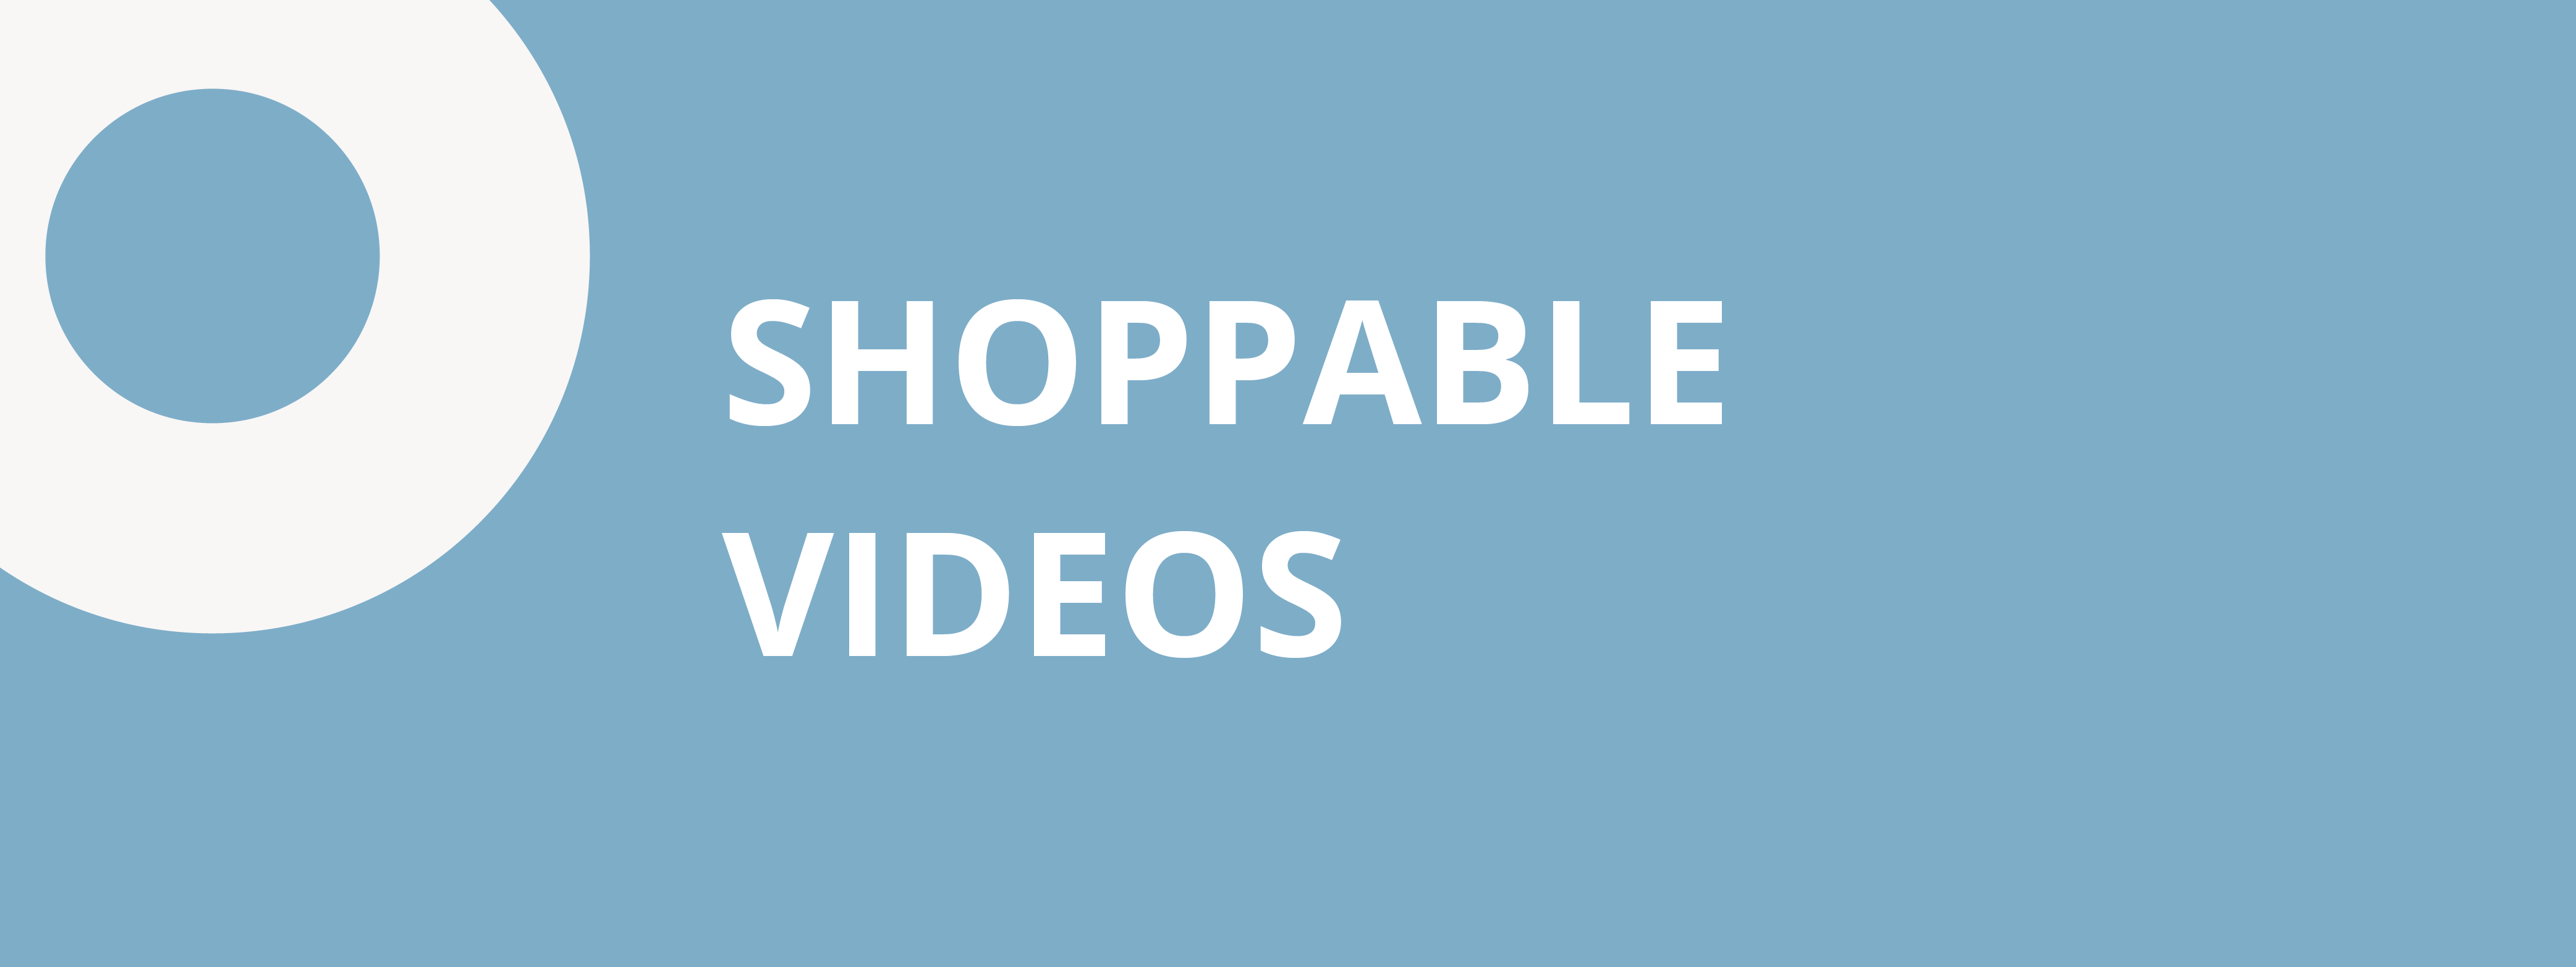 shoppable videos how2